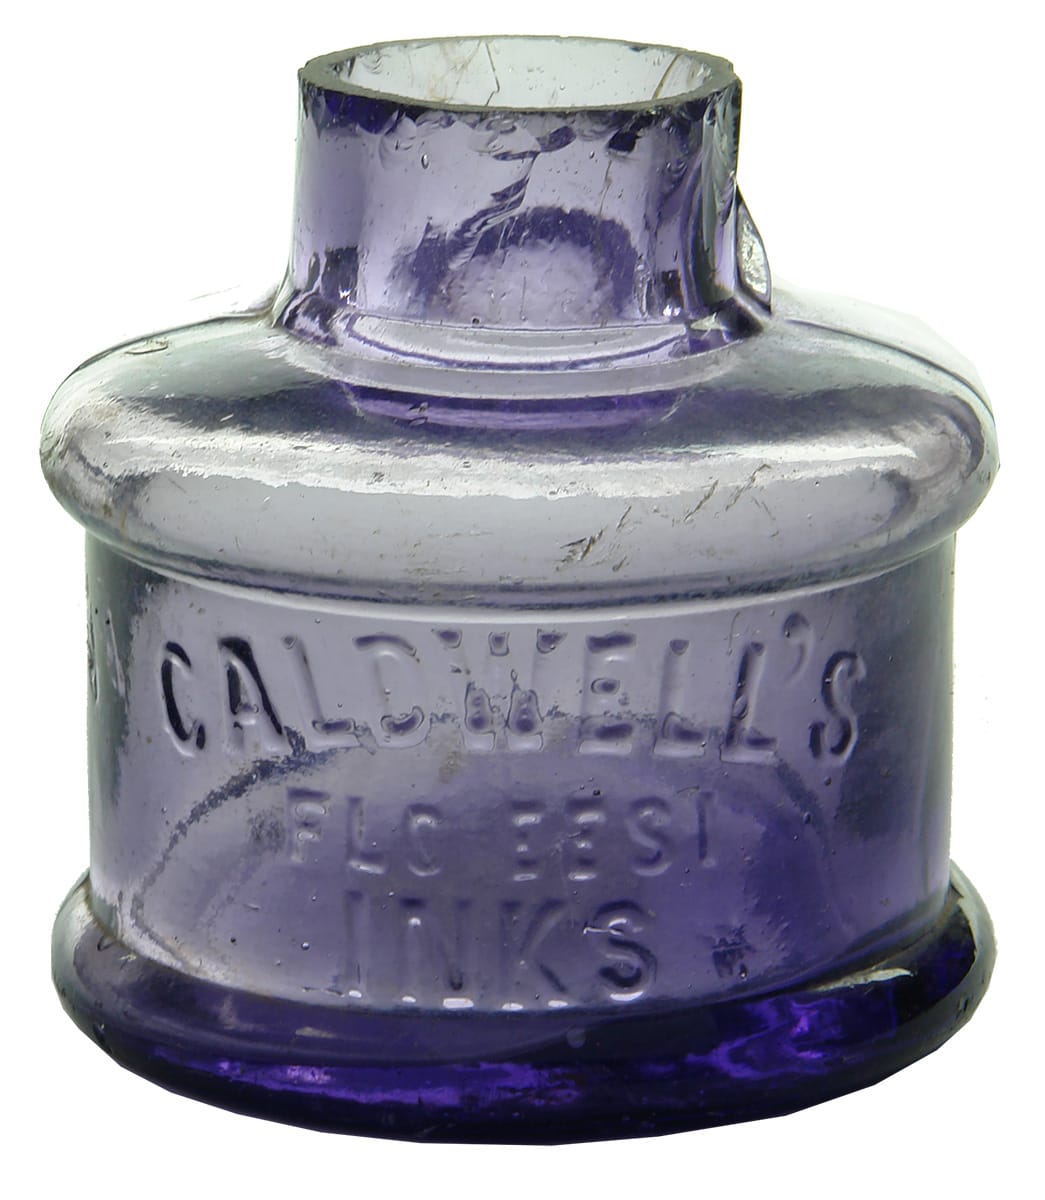 Caldwell's Flo-eesi Amethyst Glass Ink